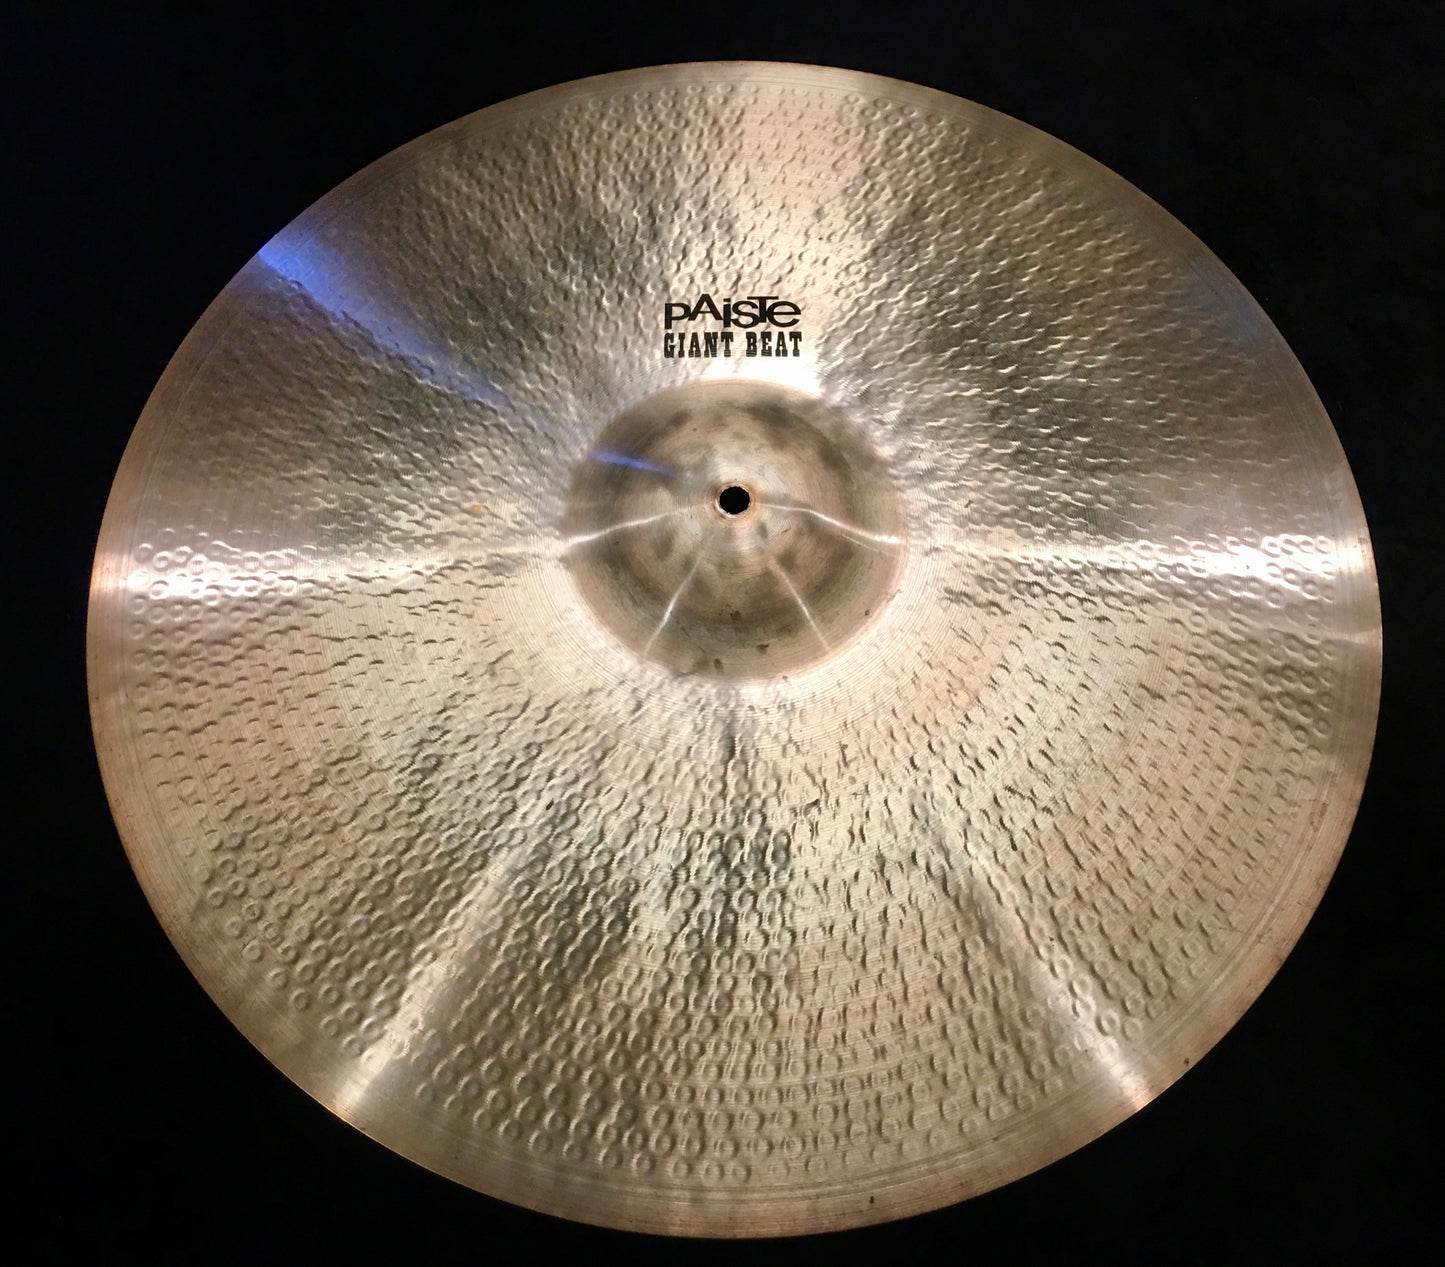 24" Paiste Giant Beat Crash / Ride Multi-Functional Cymbal 2928g